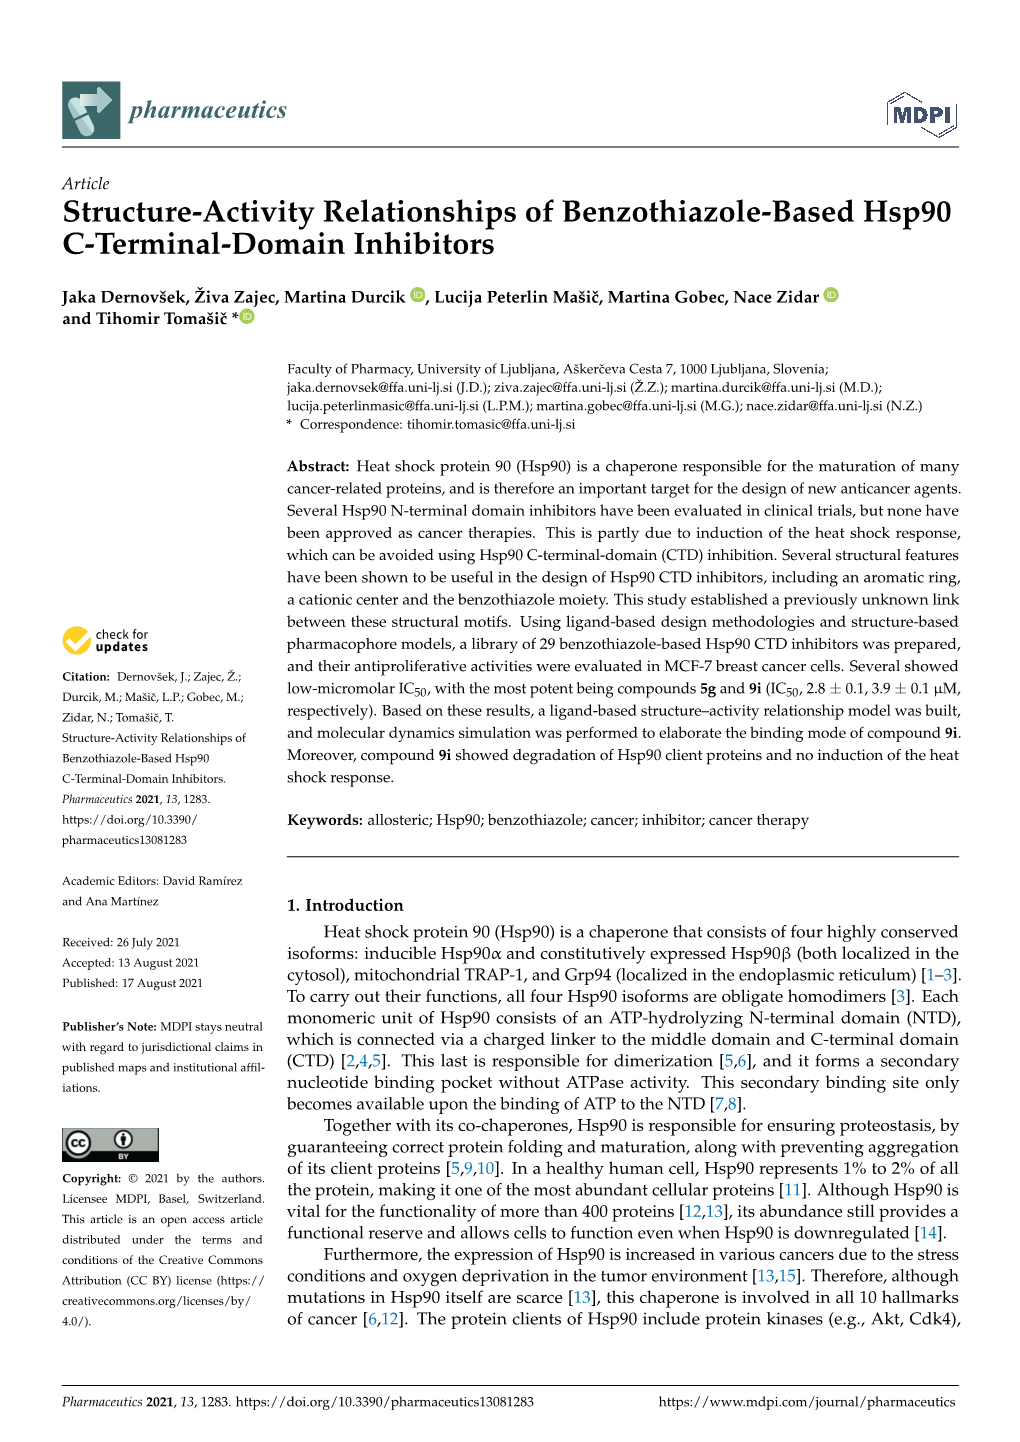 Structure–Activity Relationships of Benzothiazole-Based Hsp90 C